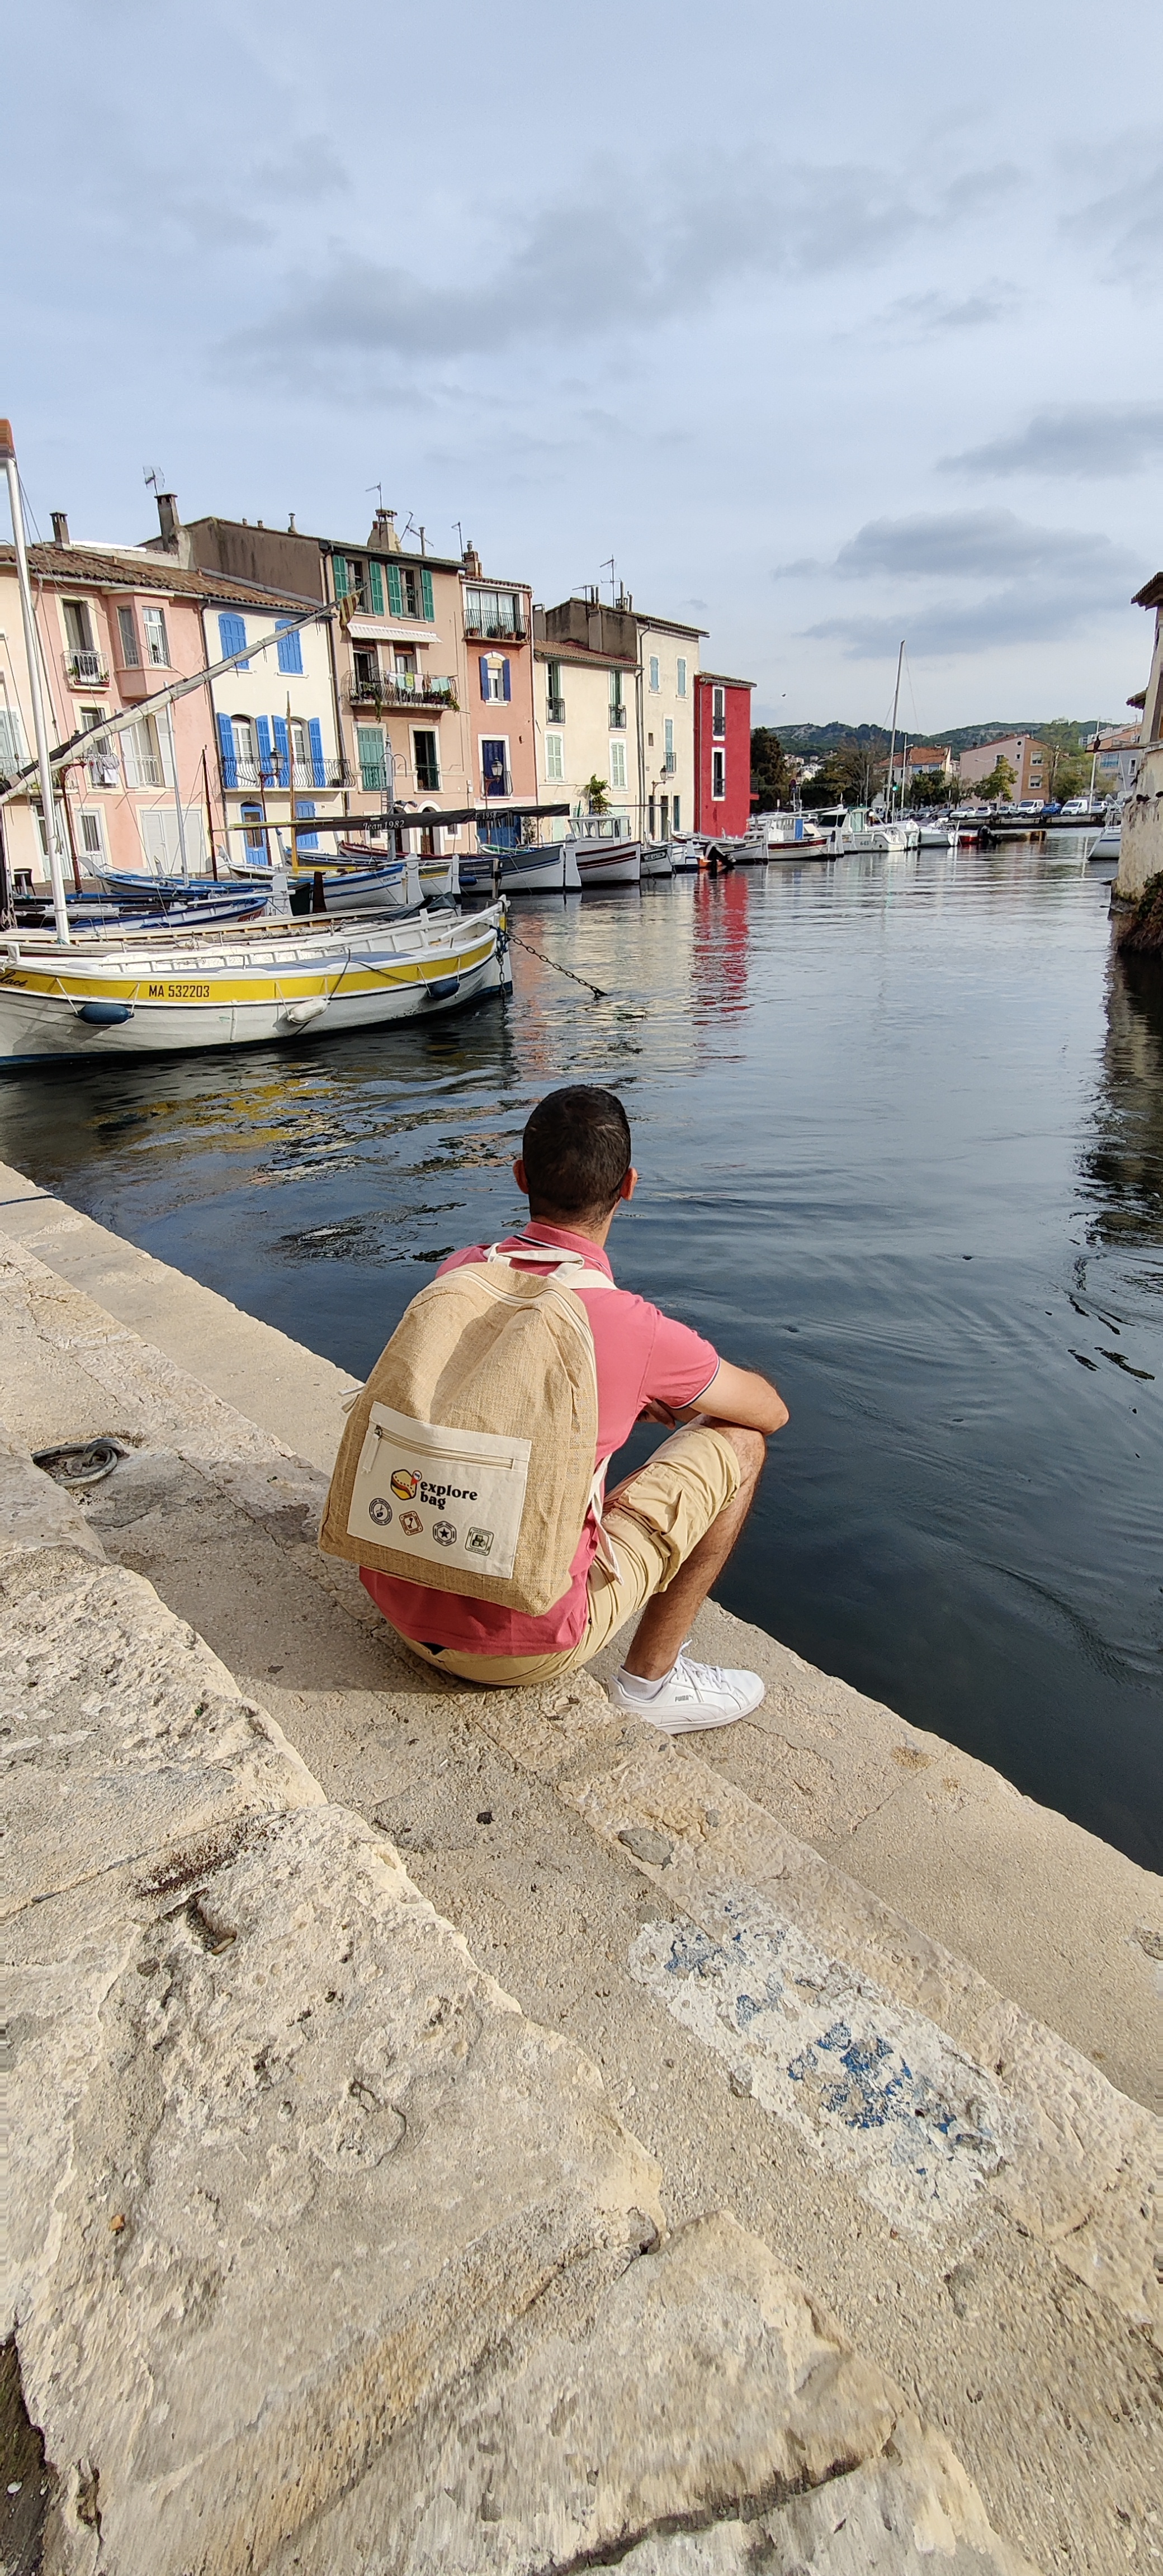 My explore bag - Odyssée en Provence depuis Martigues - © Otmartigues - SergeT